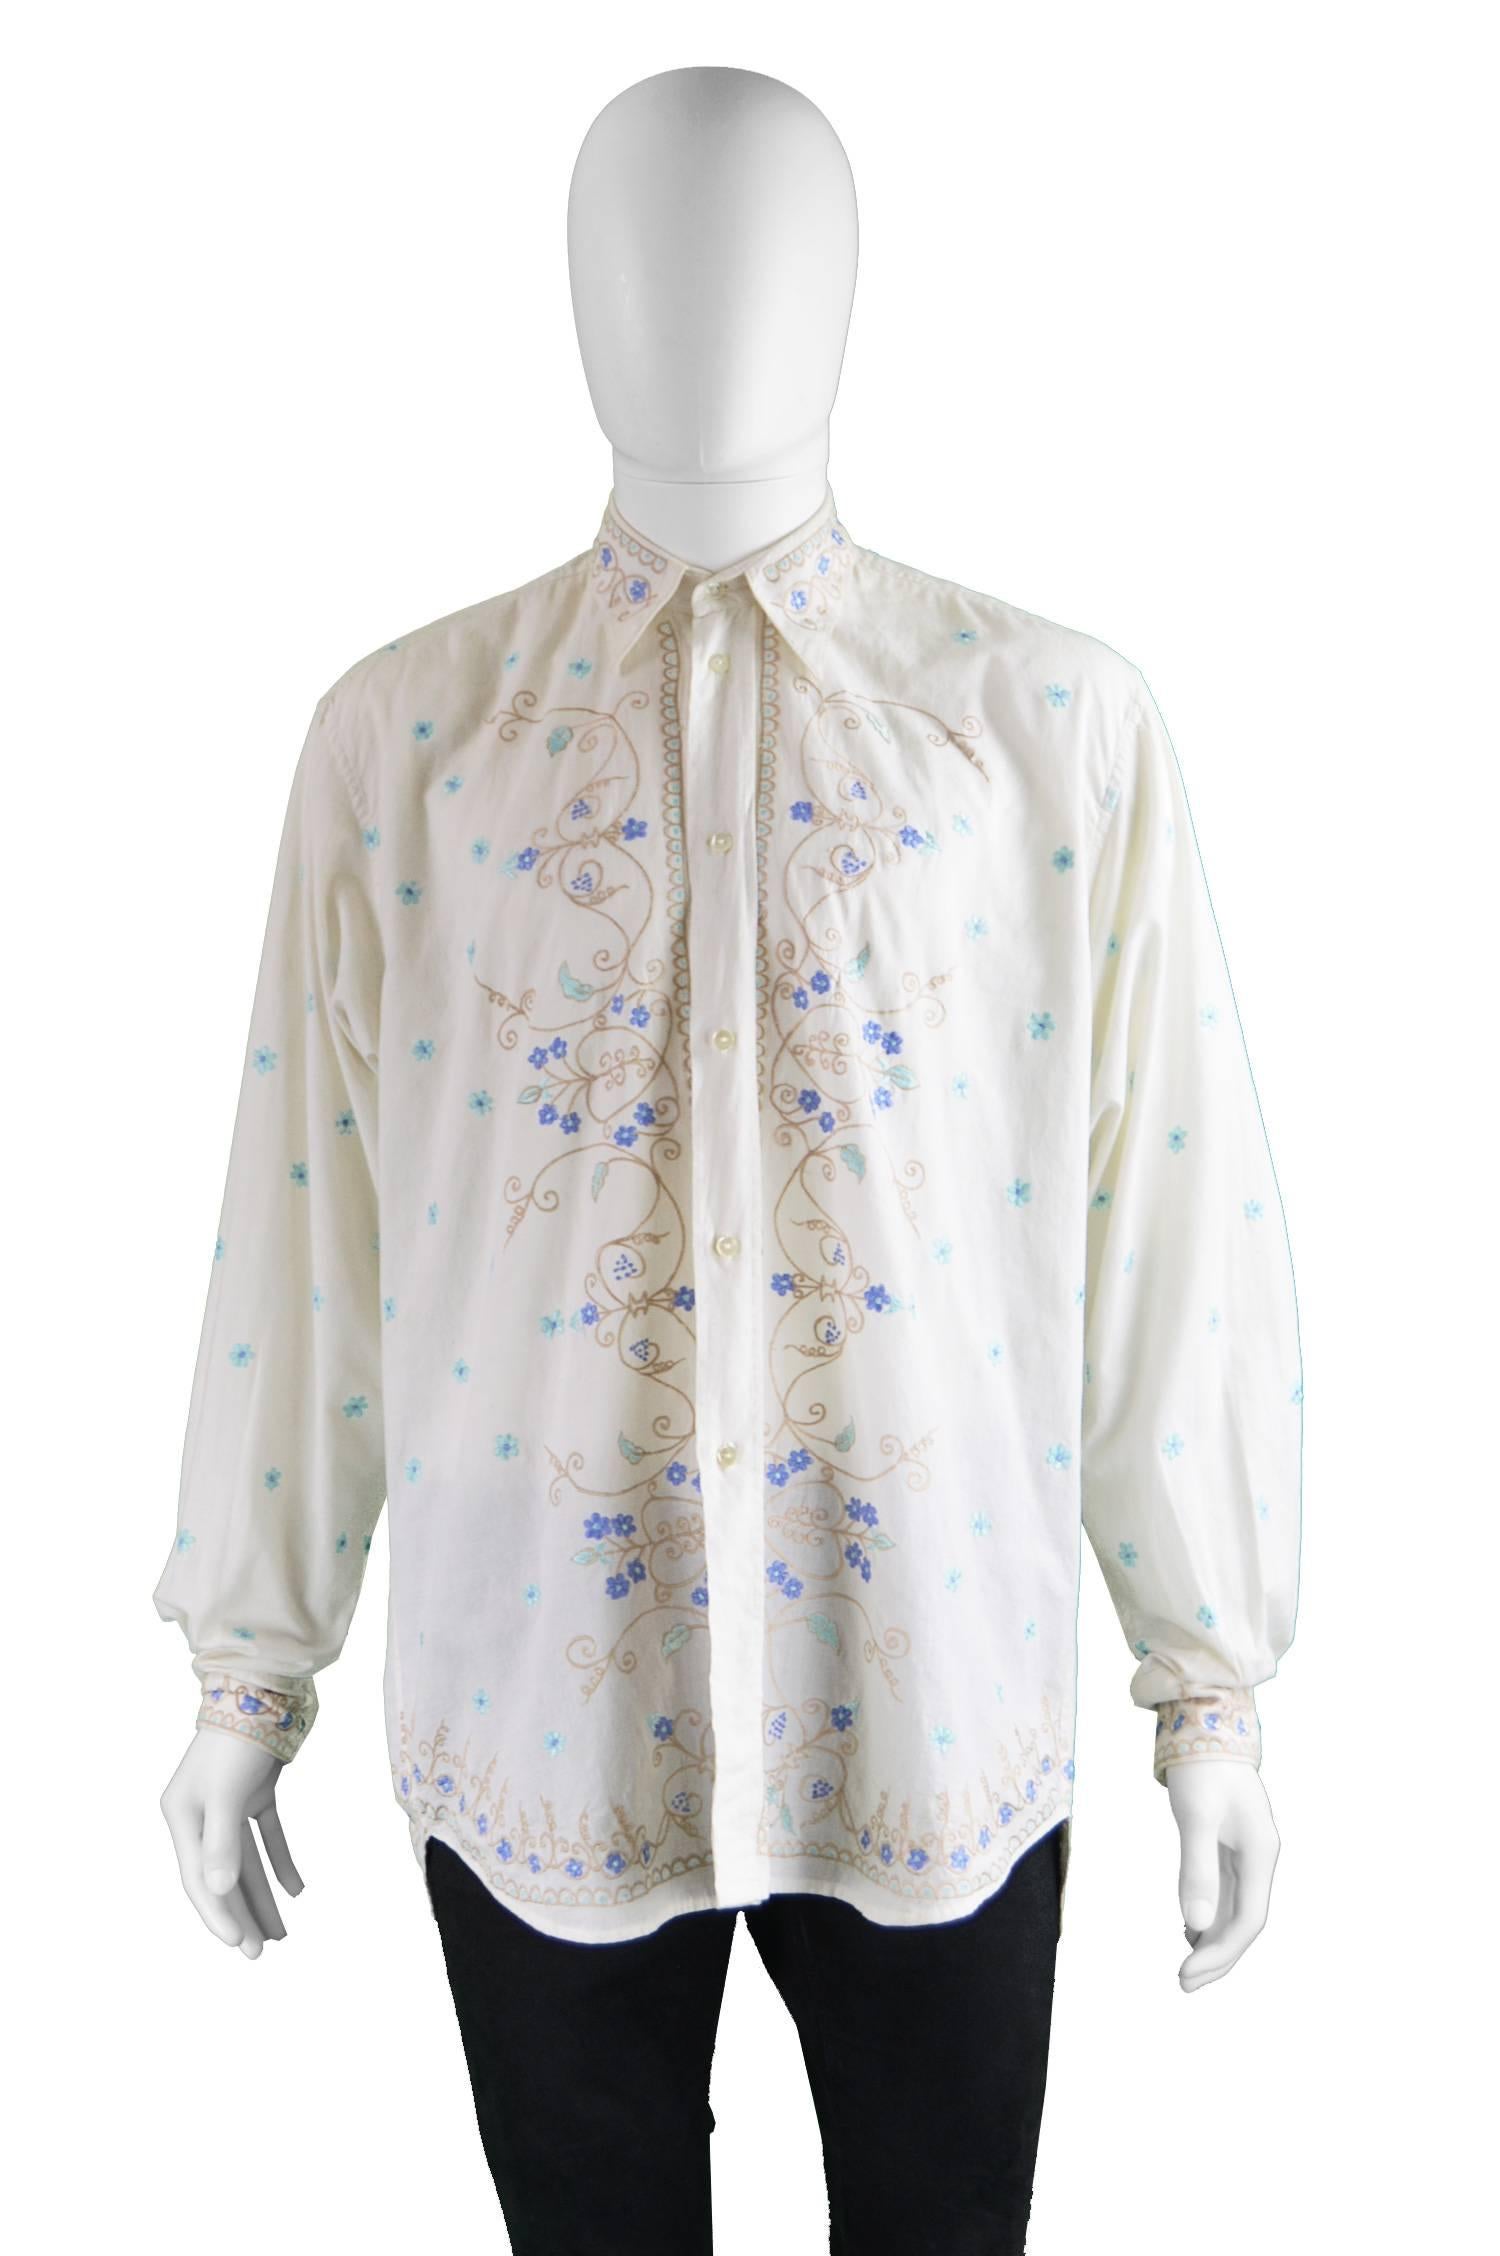 Gray Katharine Hamnett Men's Vintage Floral Embroidered Cotton Shirt, 1990s